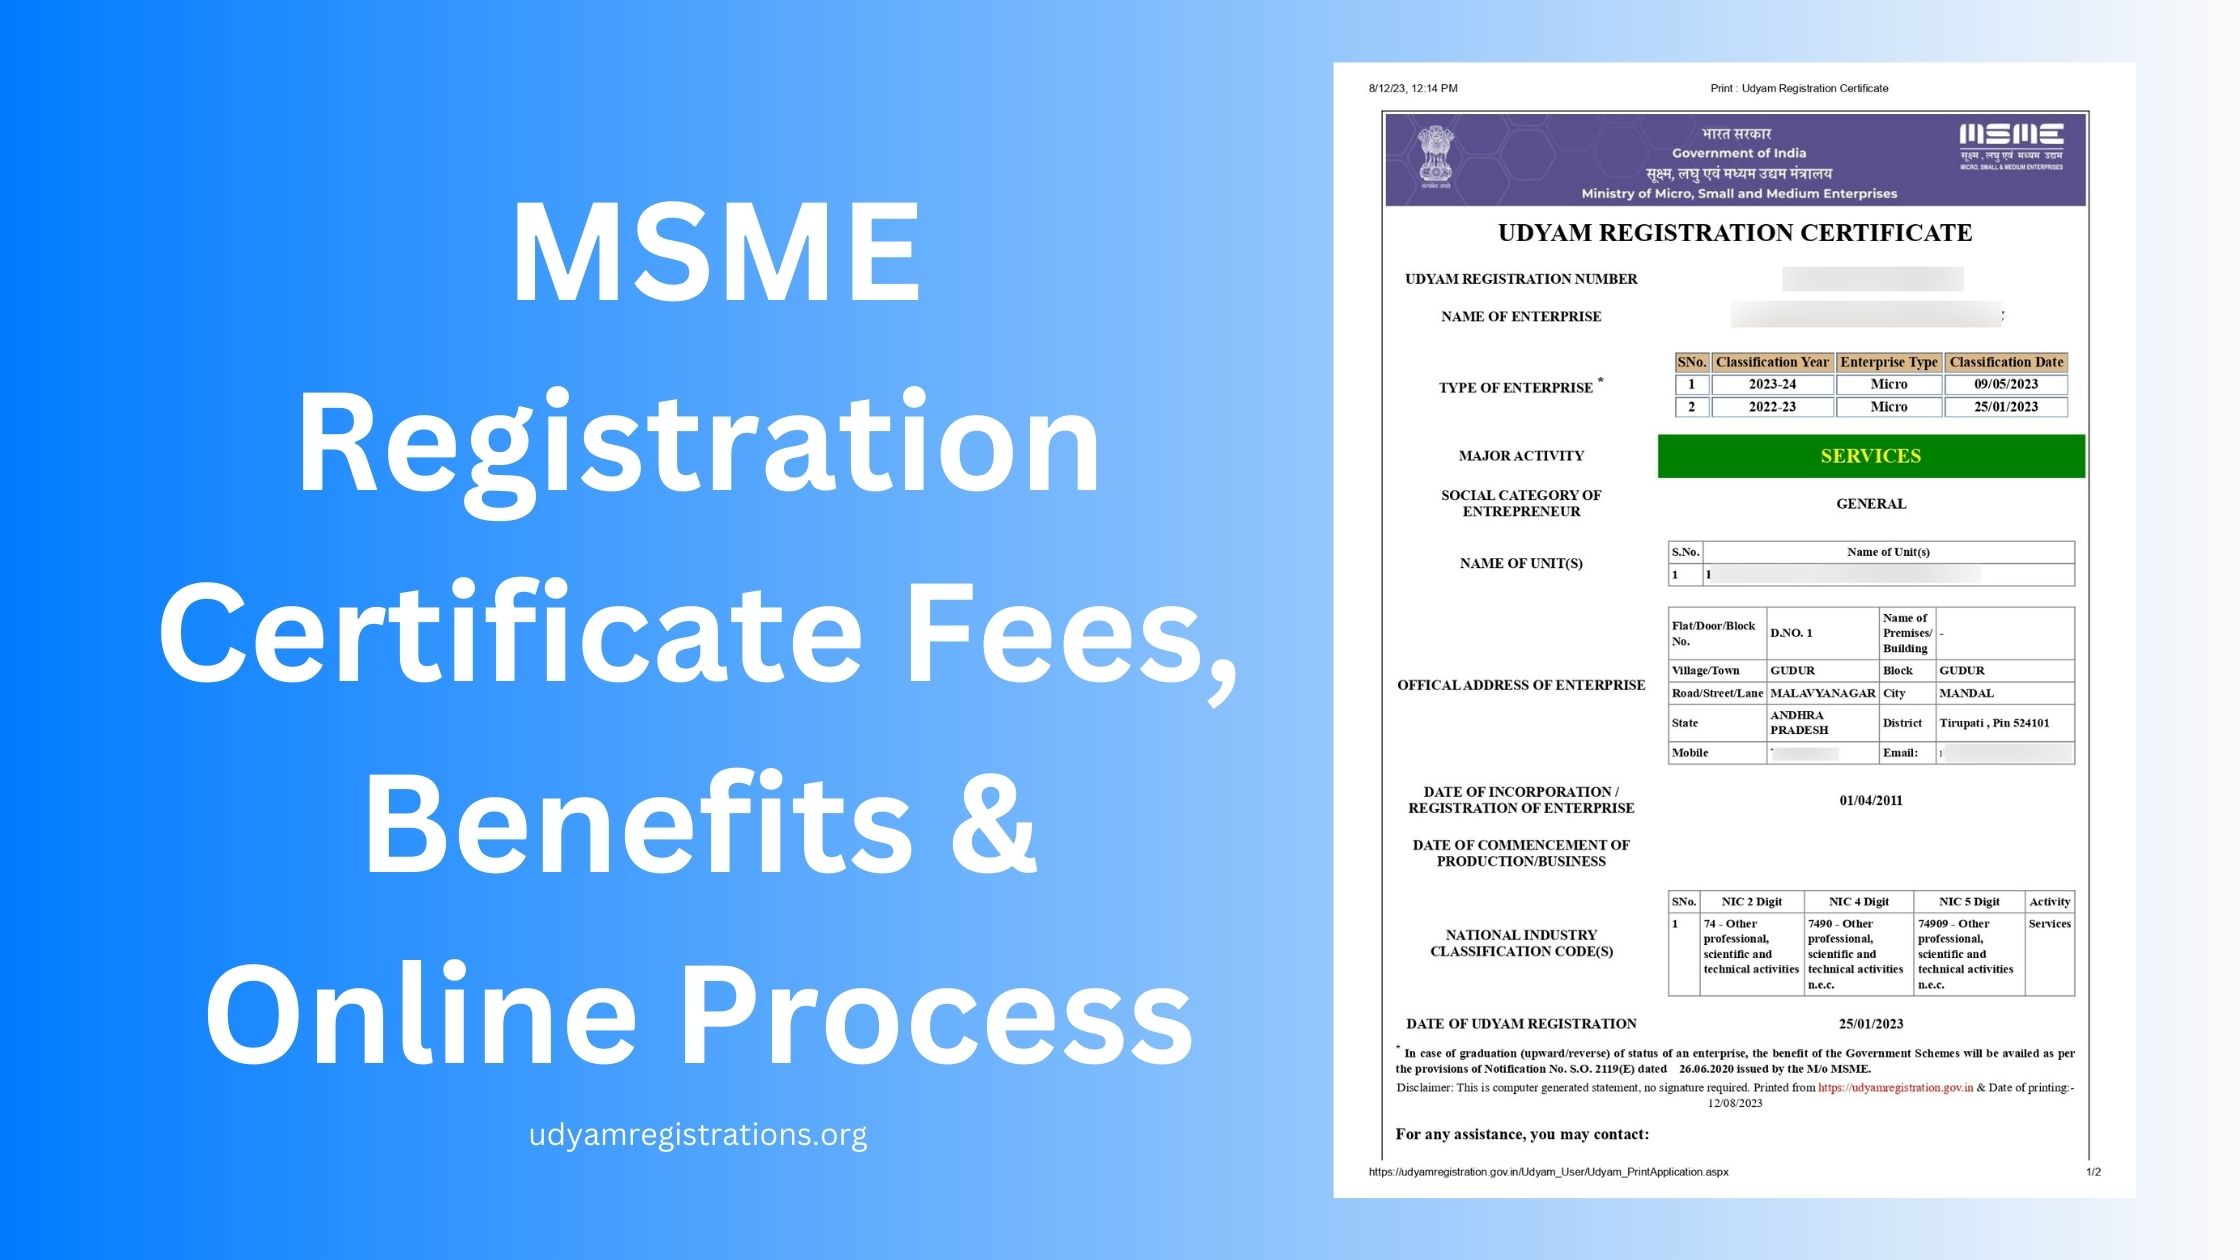 MSME Registration Certificate Fees, Benefits & Online Process